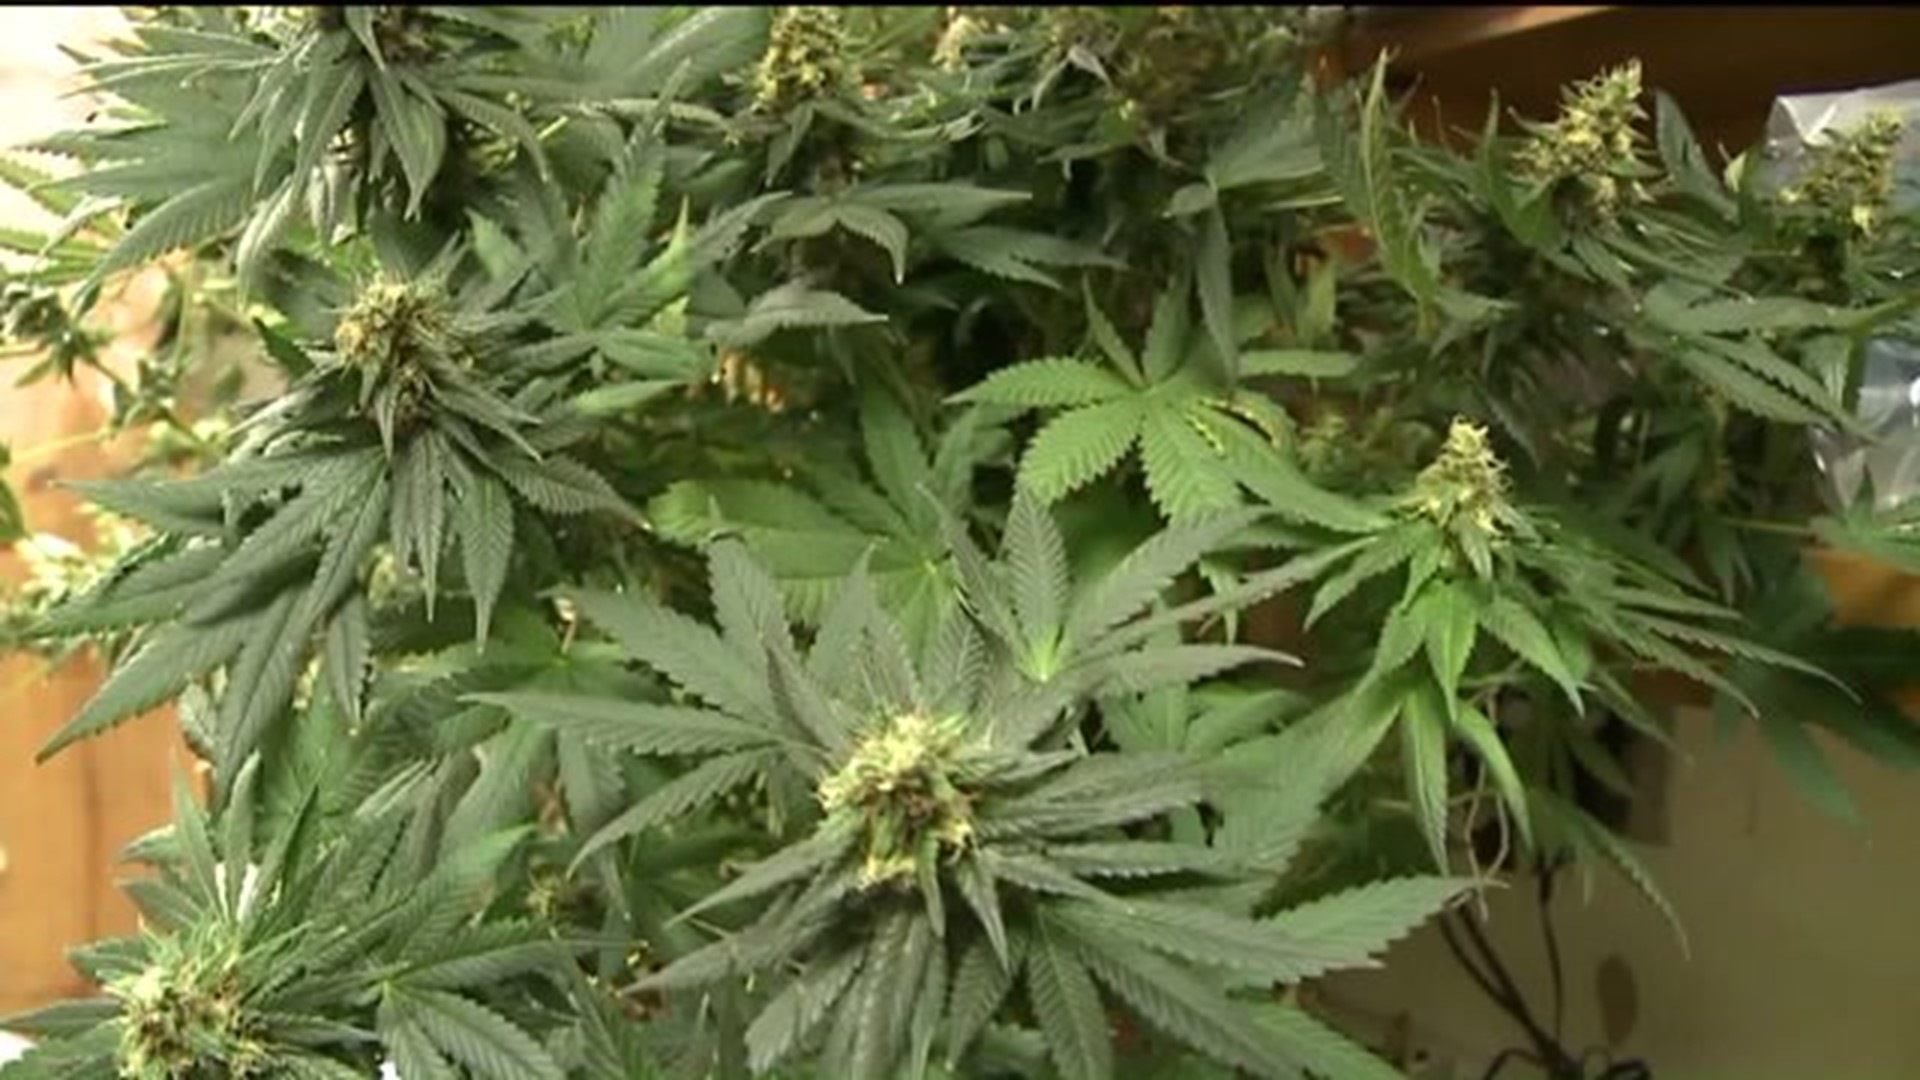 Medical Marijuana Grower Applicant Growing Controversey in Wyoming County Neighborhood